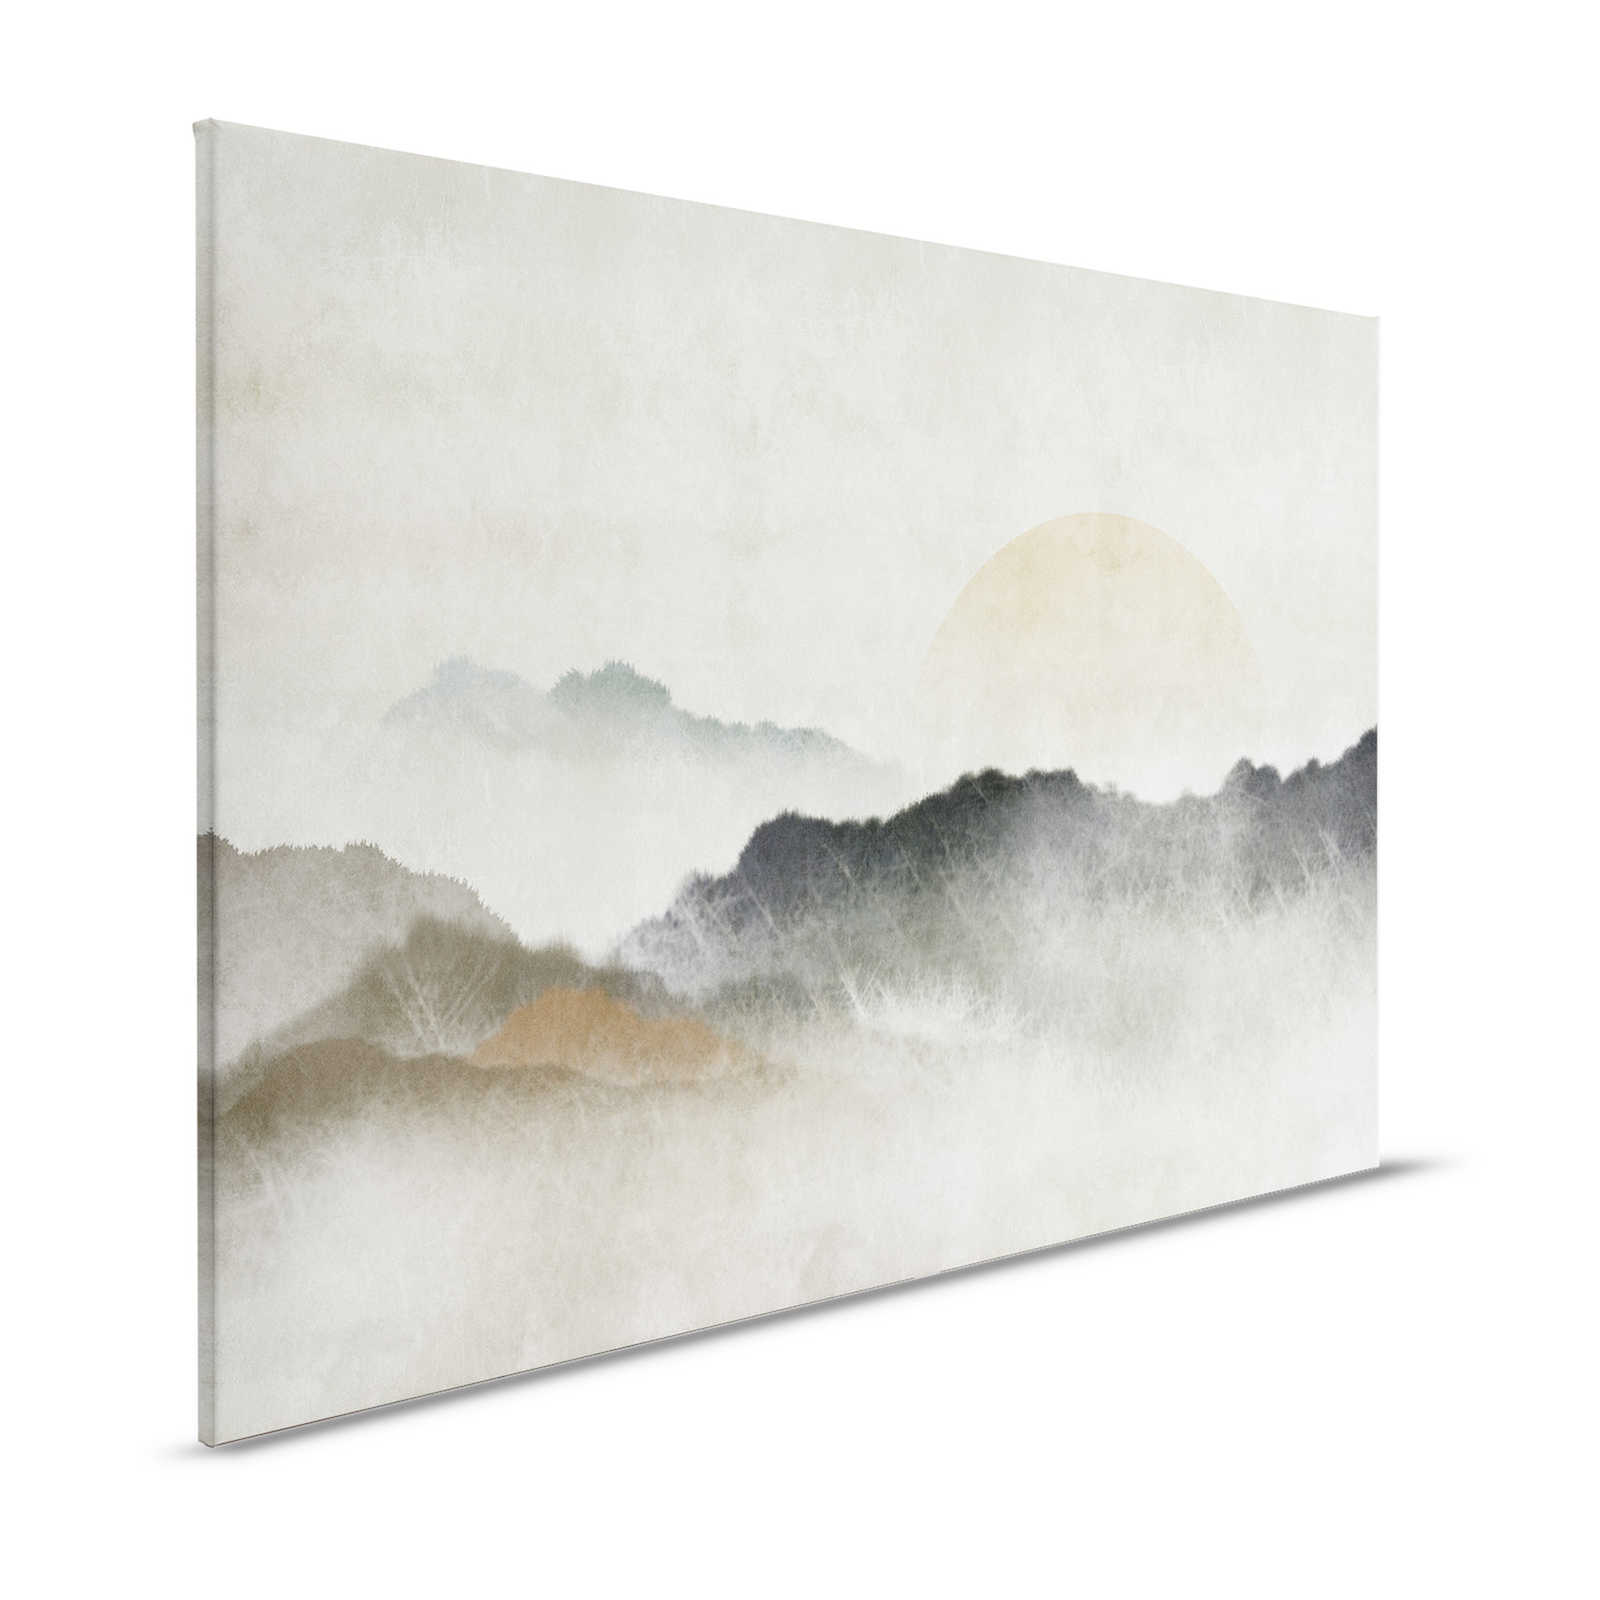 Akaishi 1 - Canvas painting Asian Print Mountain Range in Dawn - 1.20 m x 0.80 m
